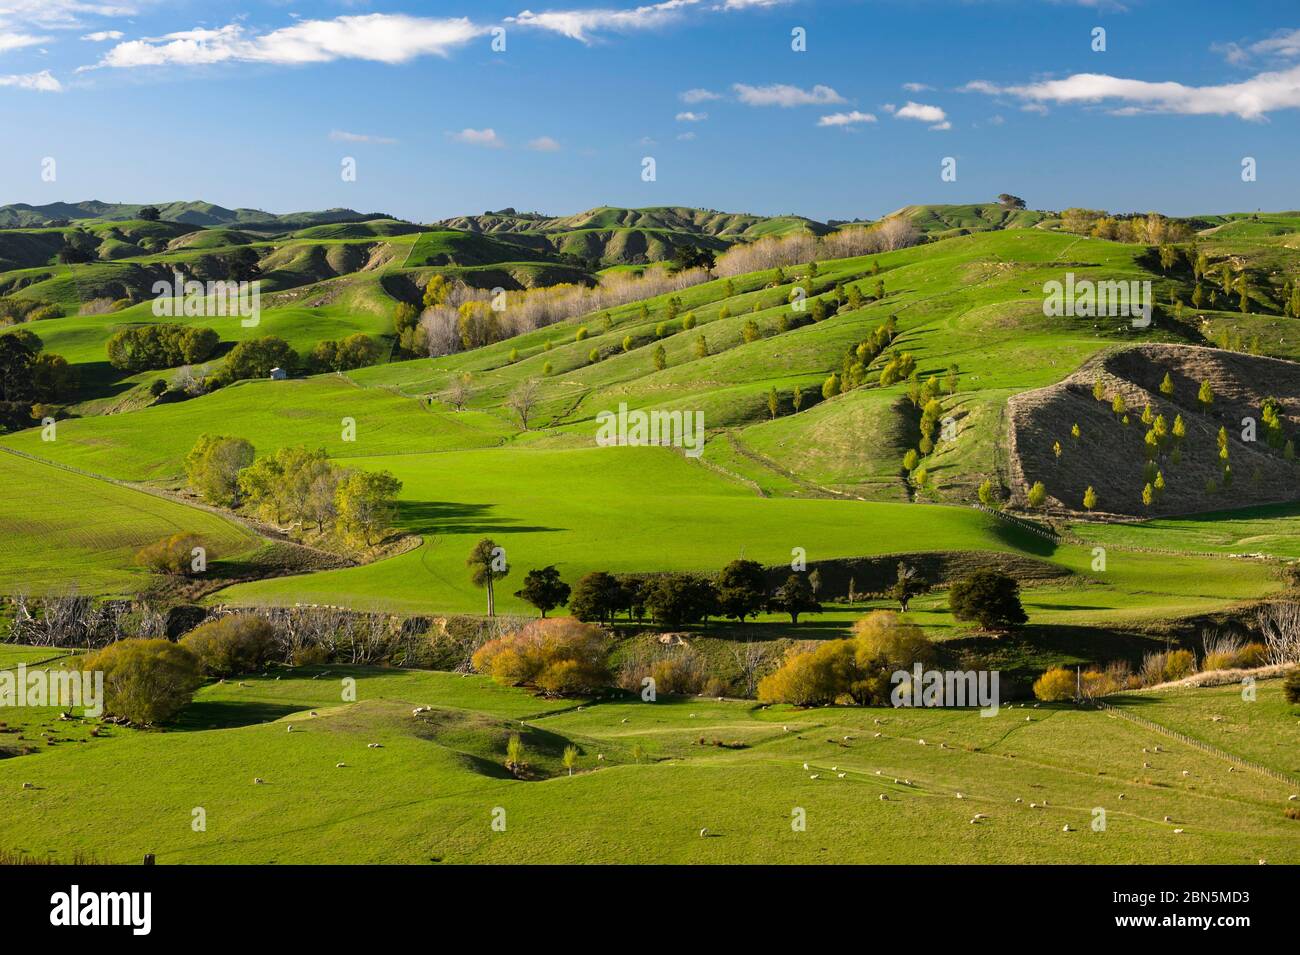 Green hilly pasture land, sheep grazing under a blue sky, Karapiro, Matamata, Waikato, North Island, New Zealand Stock Photo